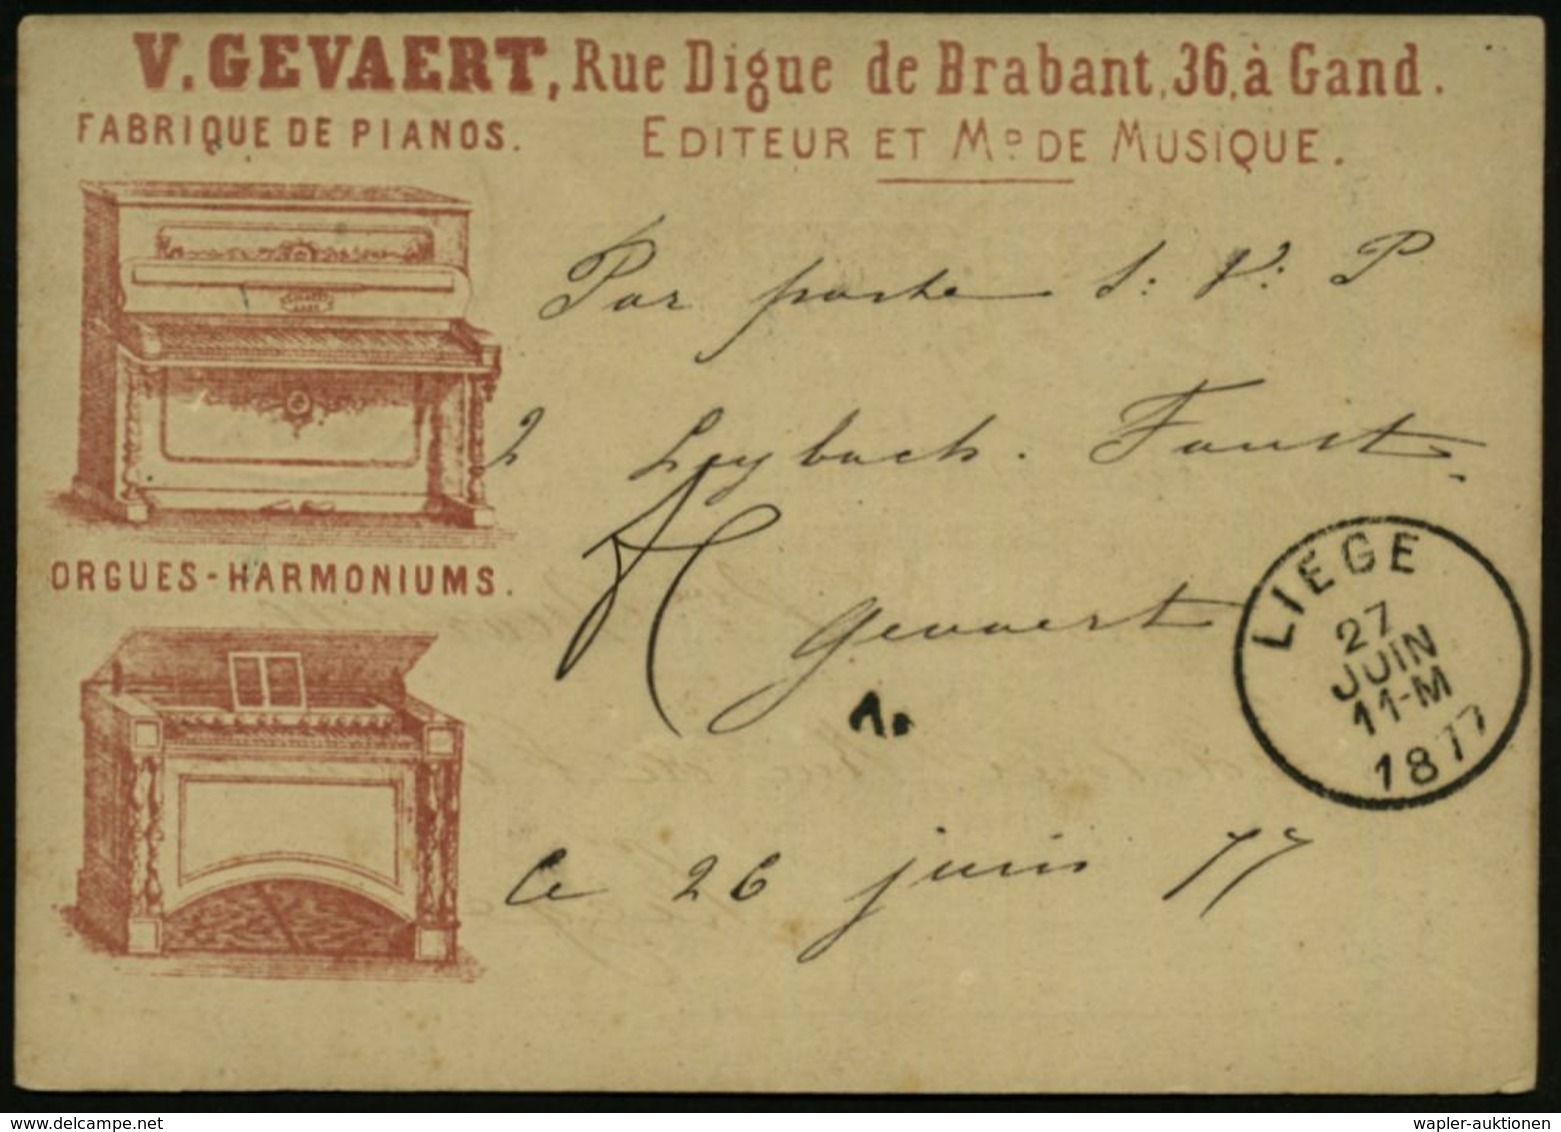 MUSIK-INSTRUMENTE ALLGEMEIN : BELGIEN 1877 (26.6.) Reklame-PP 5 C. Ziffer, Viol.: V. GEVAERT.. Gand, FABRIQUE DE PIANOS  - Musique